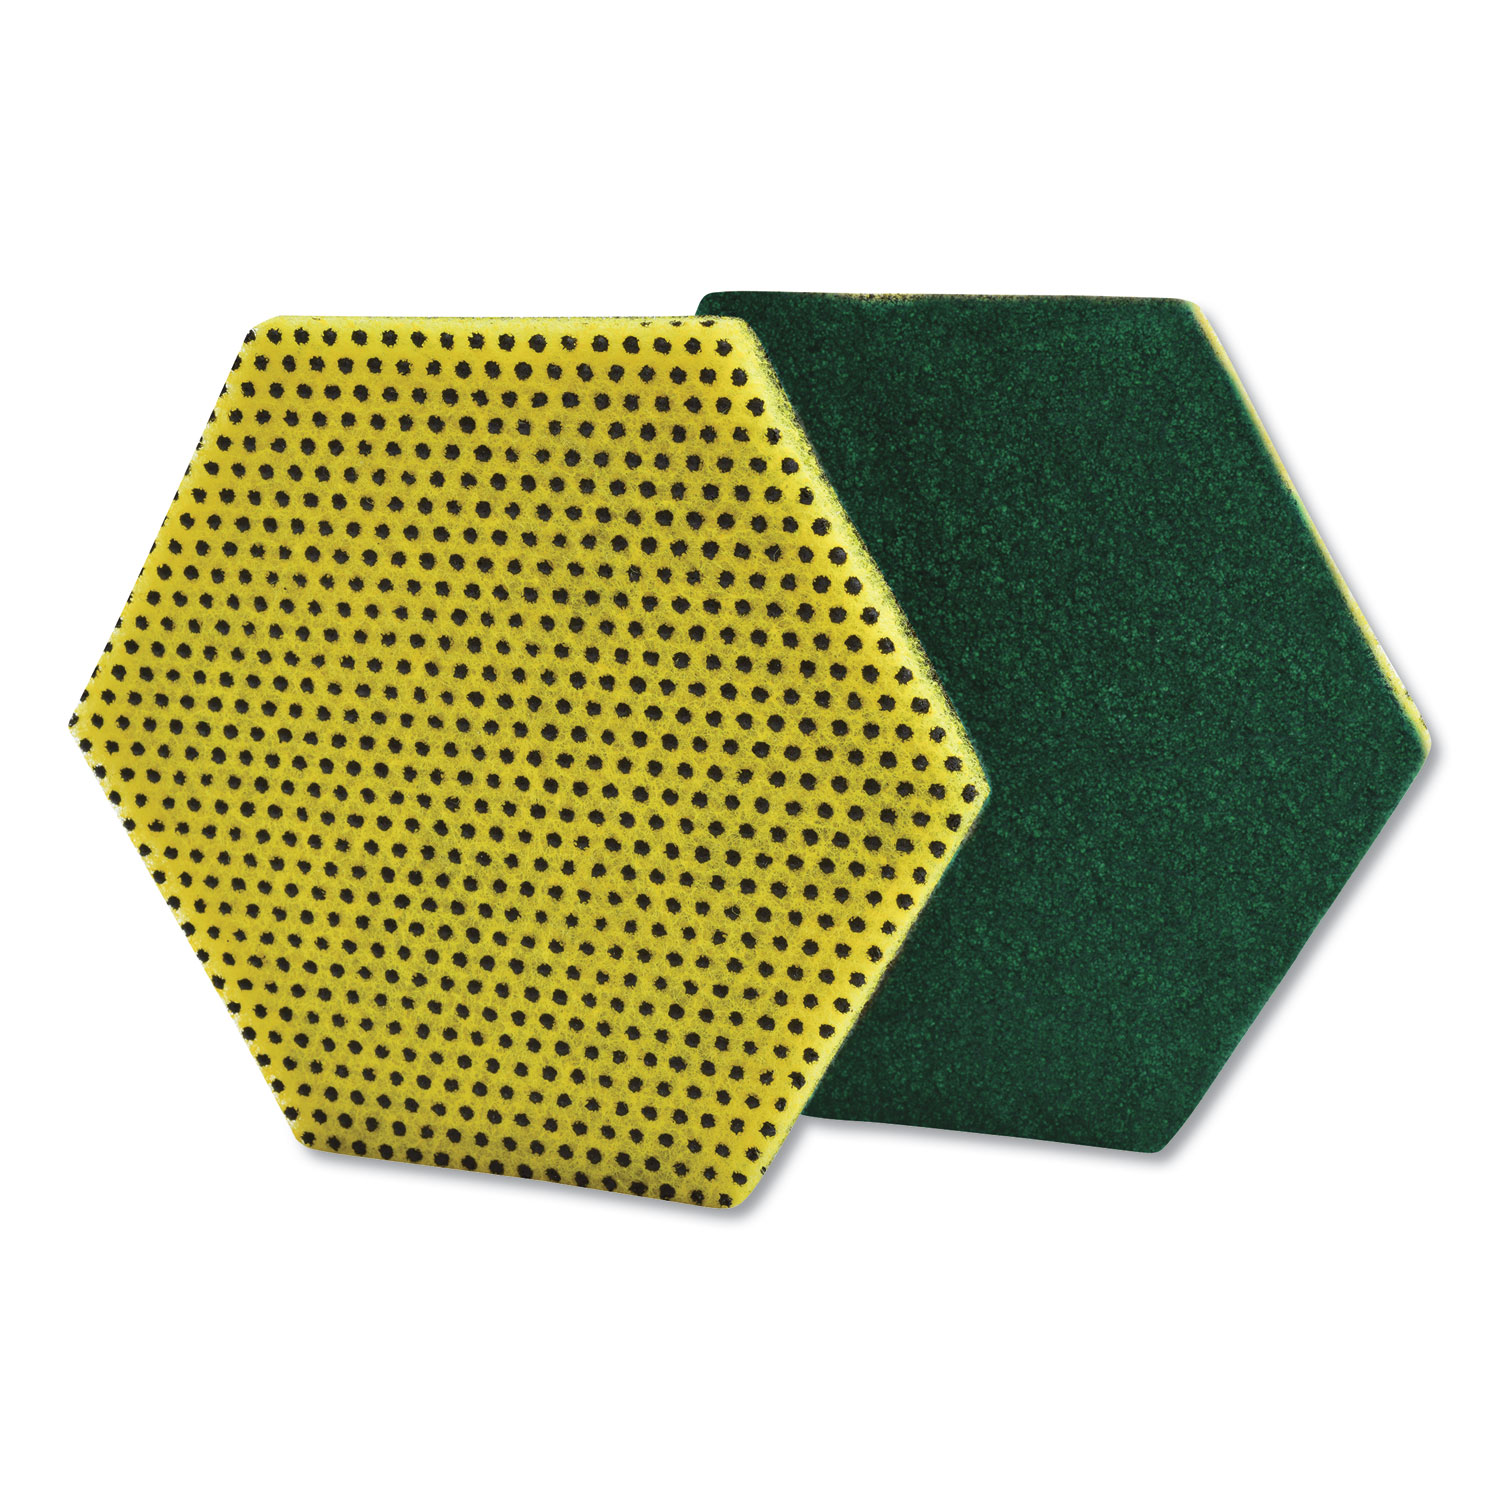  Scotch-Brite 96HEX Dual Purpose Scour Pad, 5 x 5, Green/Yellow, 15/Carton (MMM96HEX) 